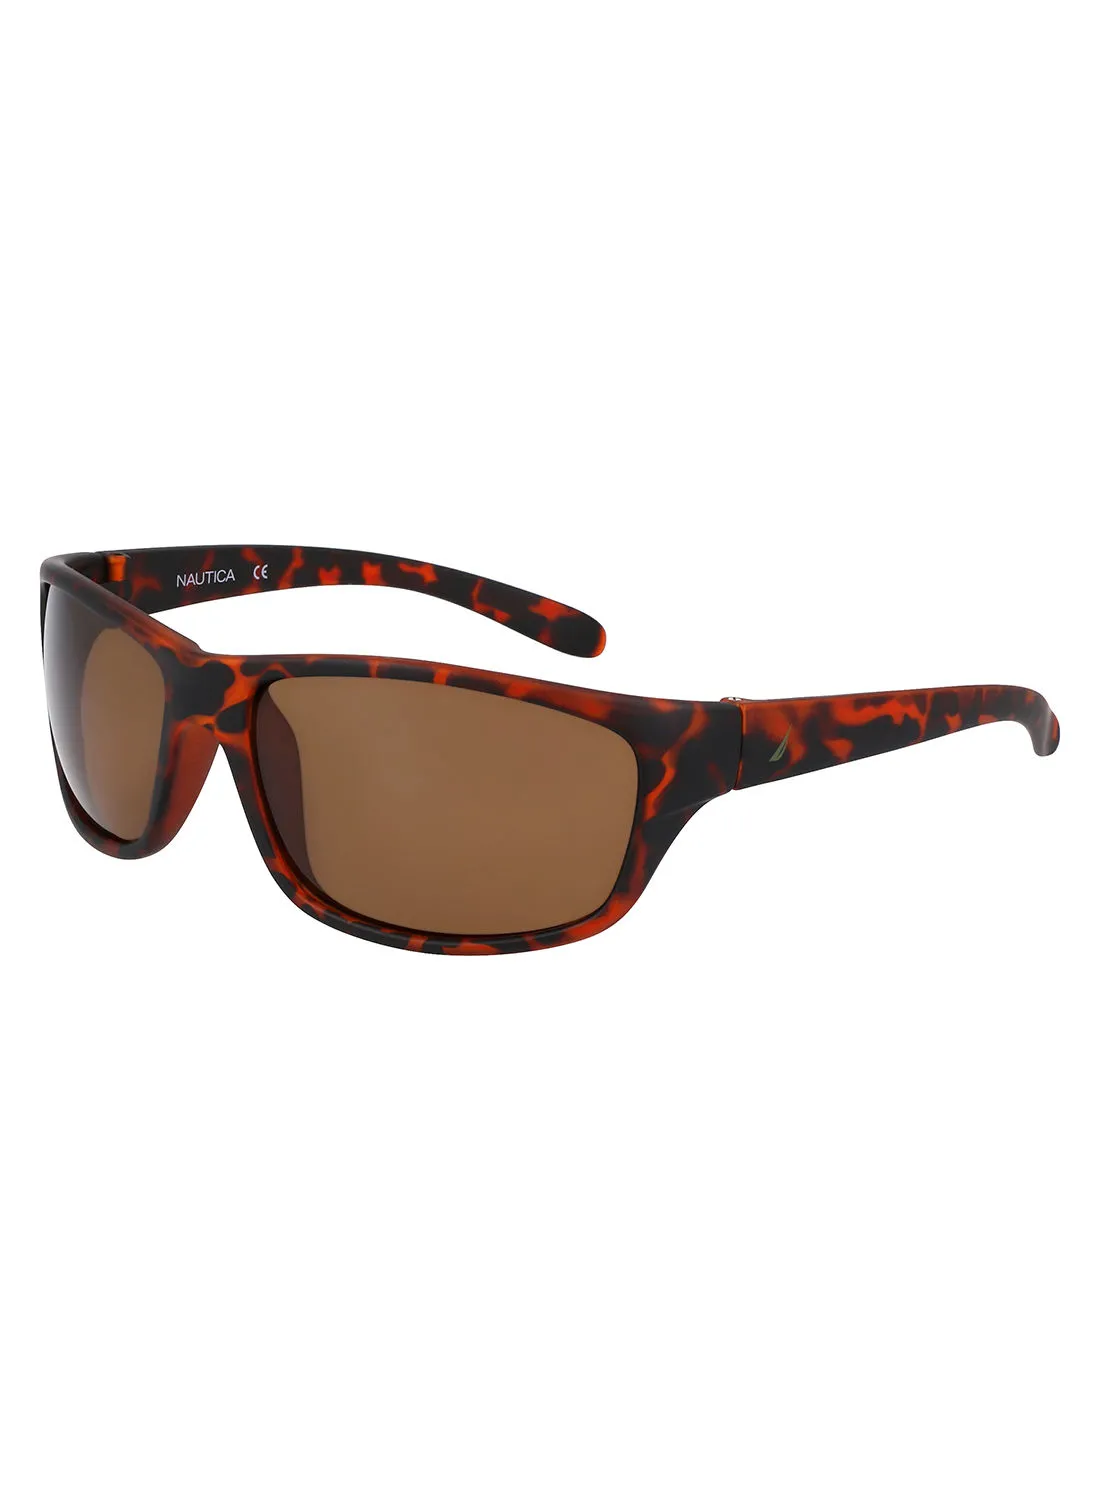 NAUTICA Men's Rectangular Sunglasses - 39240-215-6216 - Lens Size: 62 Mm